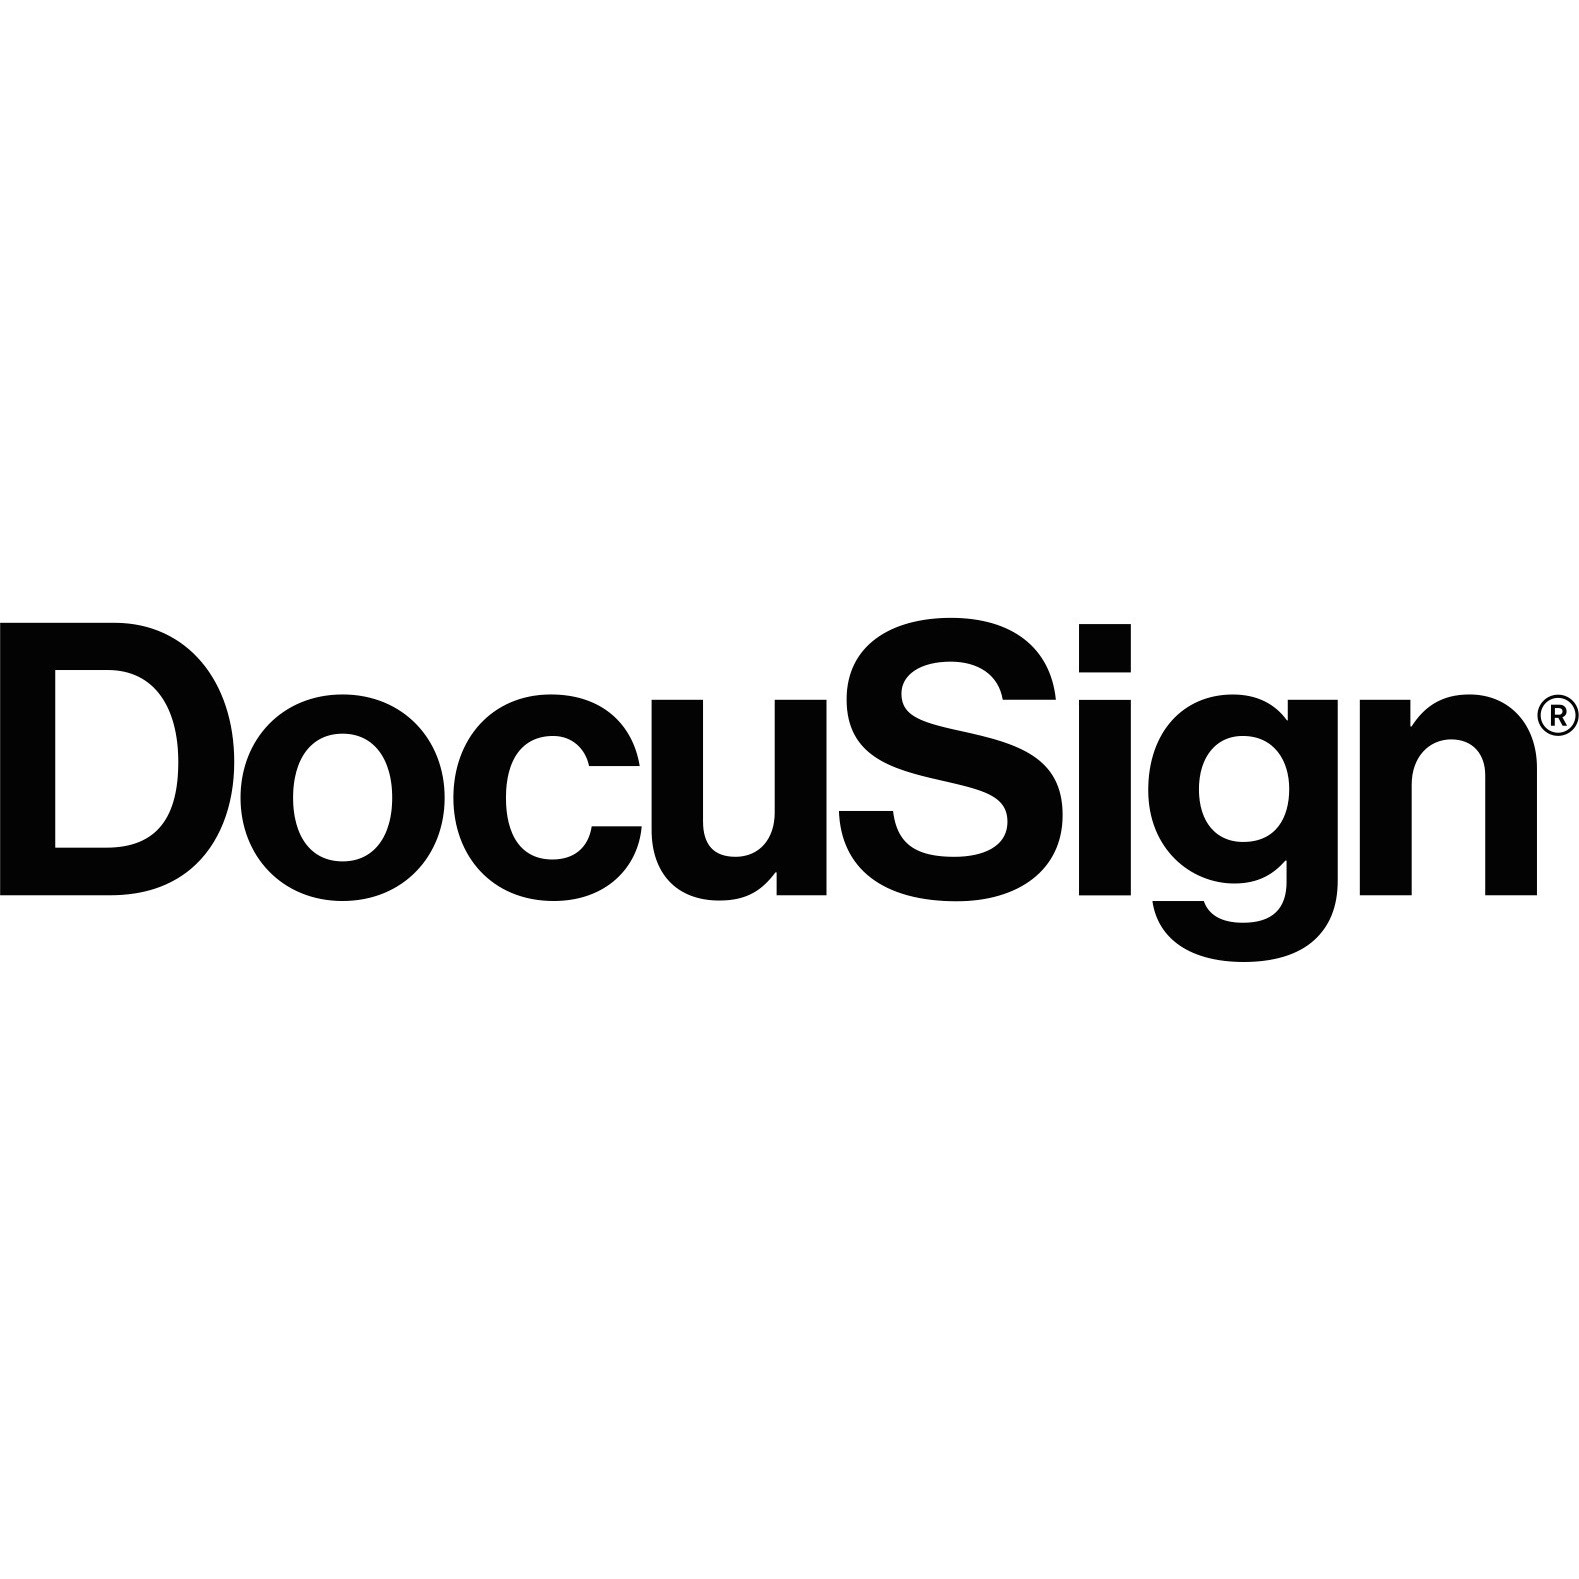 DocuSign anuncia resultados financeiros do segundo trimestre de seu ano fiscal